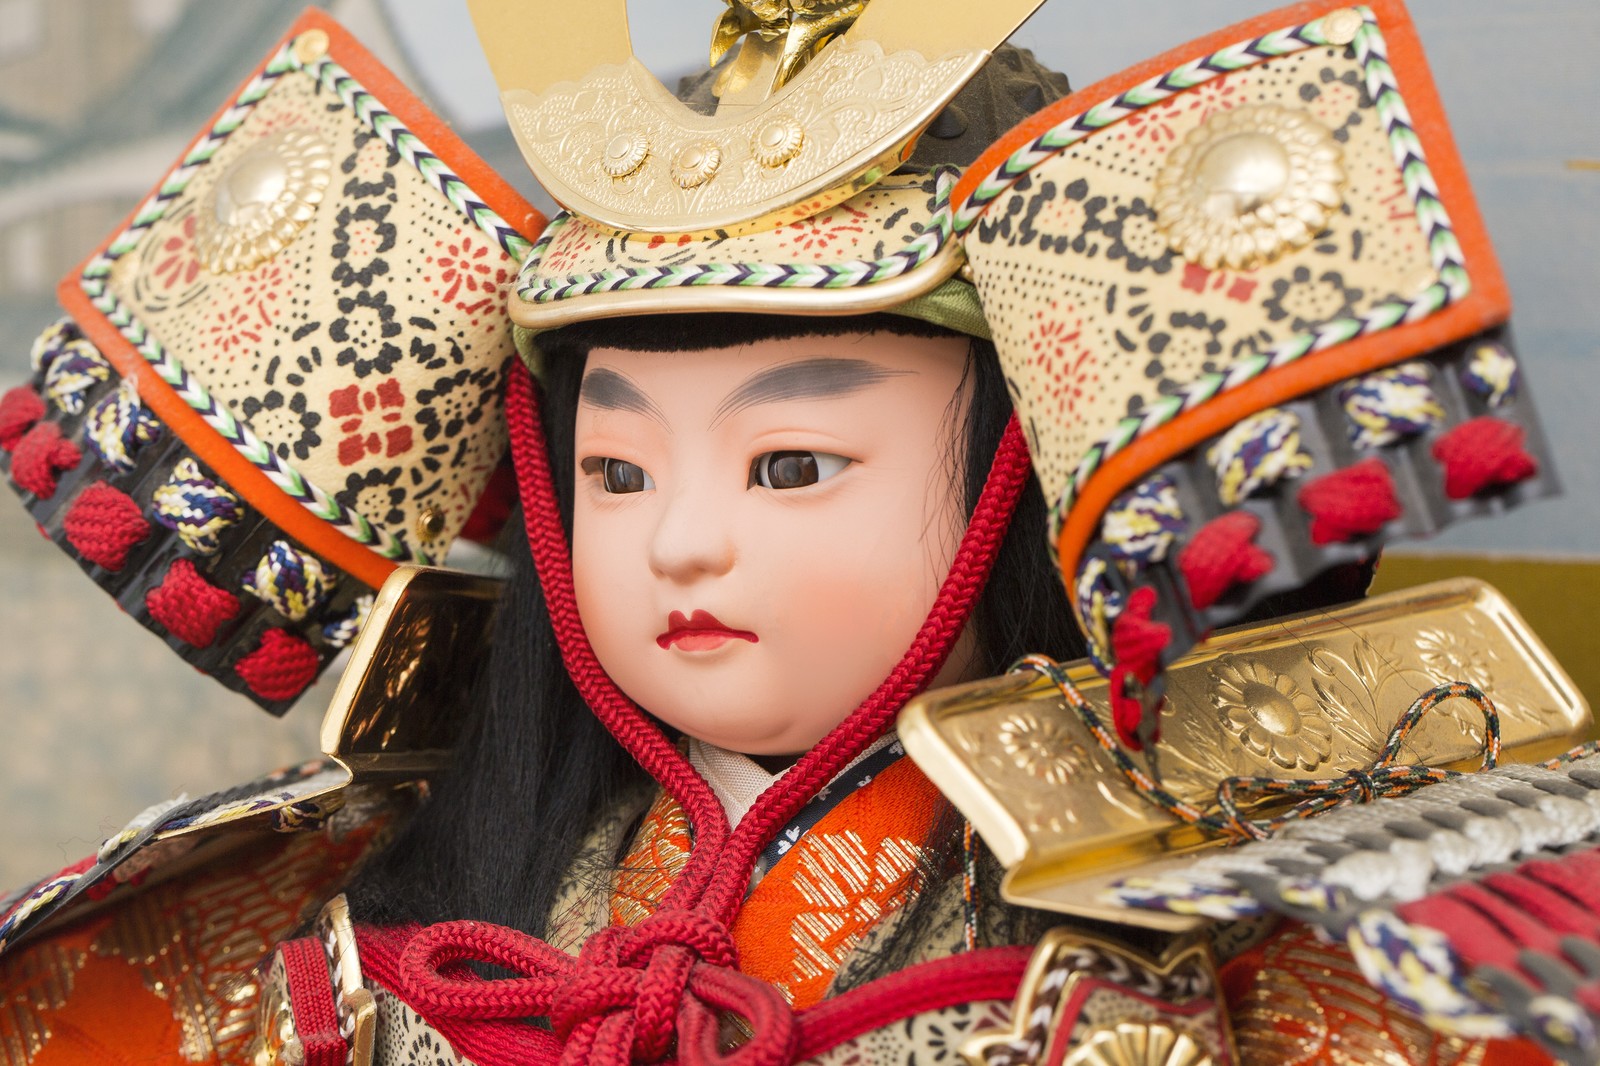 Samurai doll (May doll)